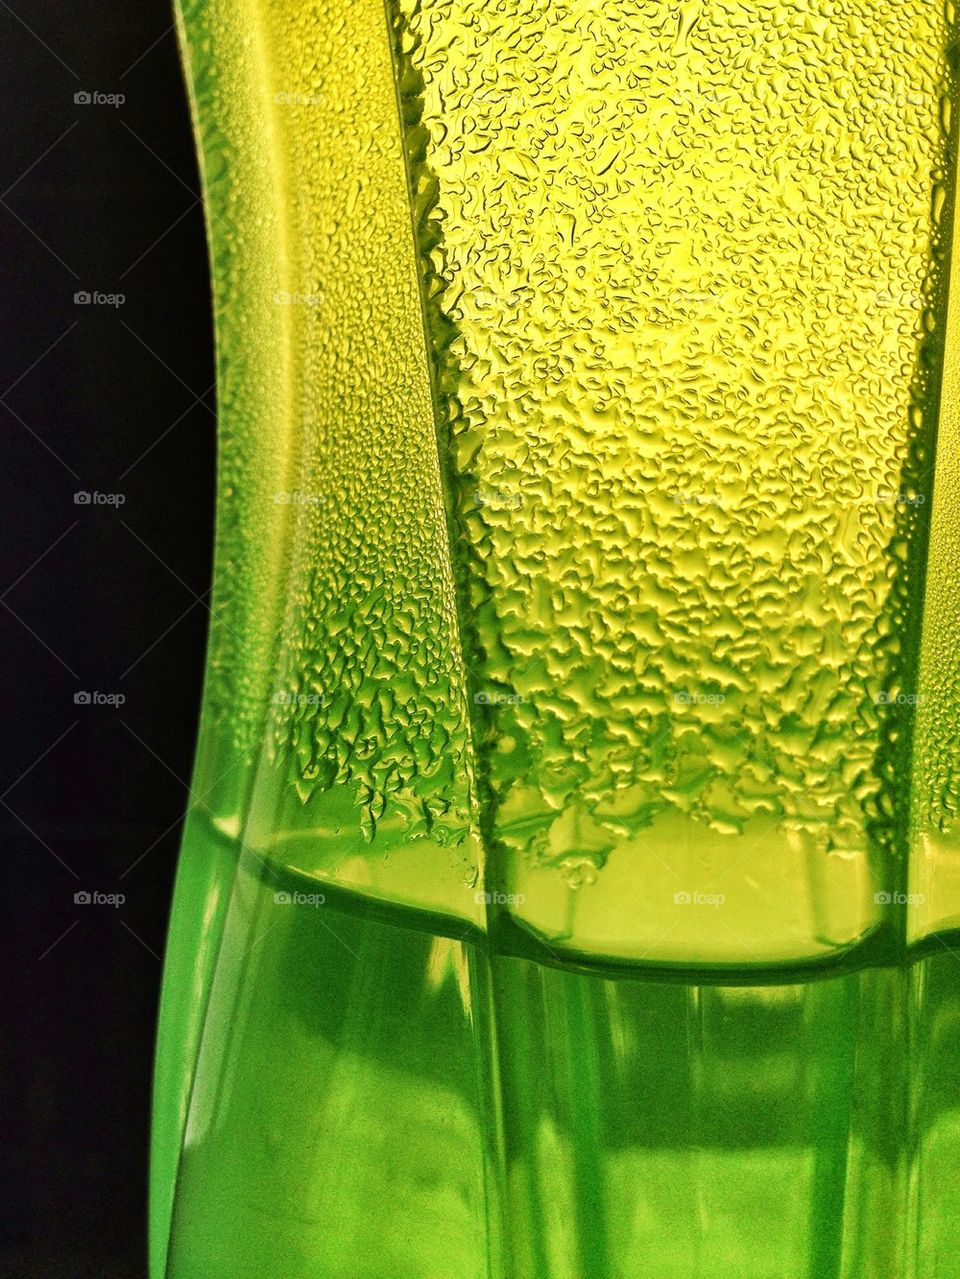 Green bottle close up